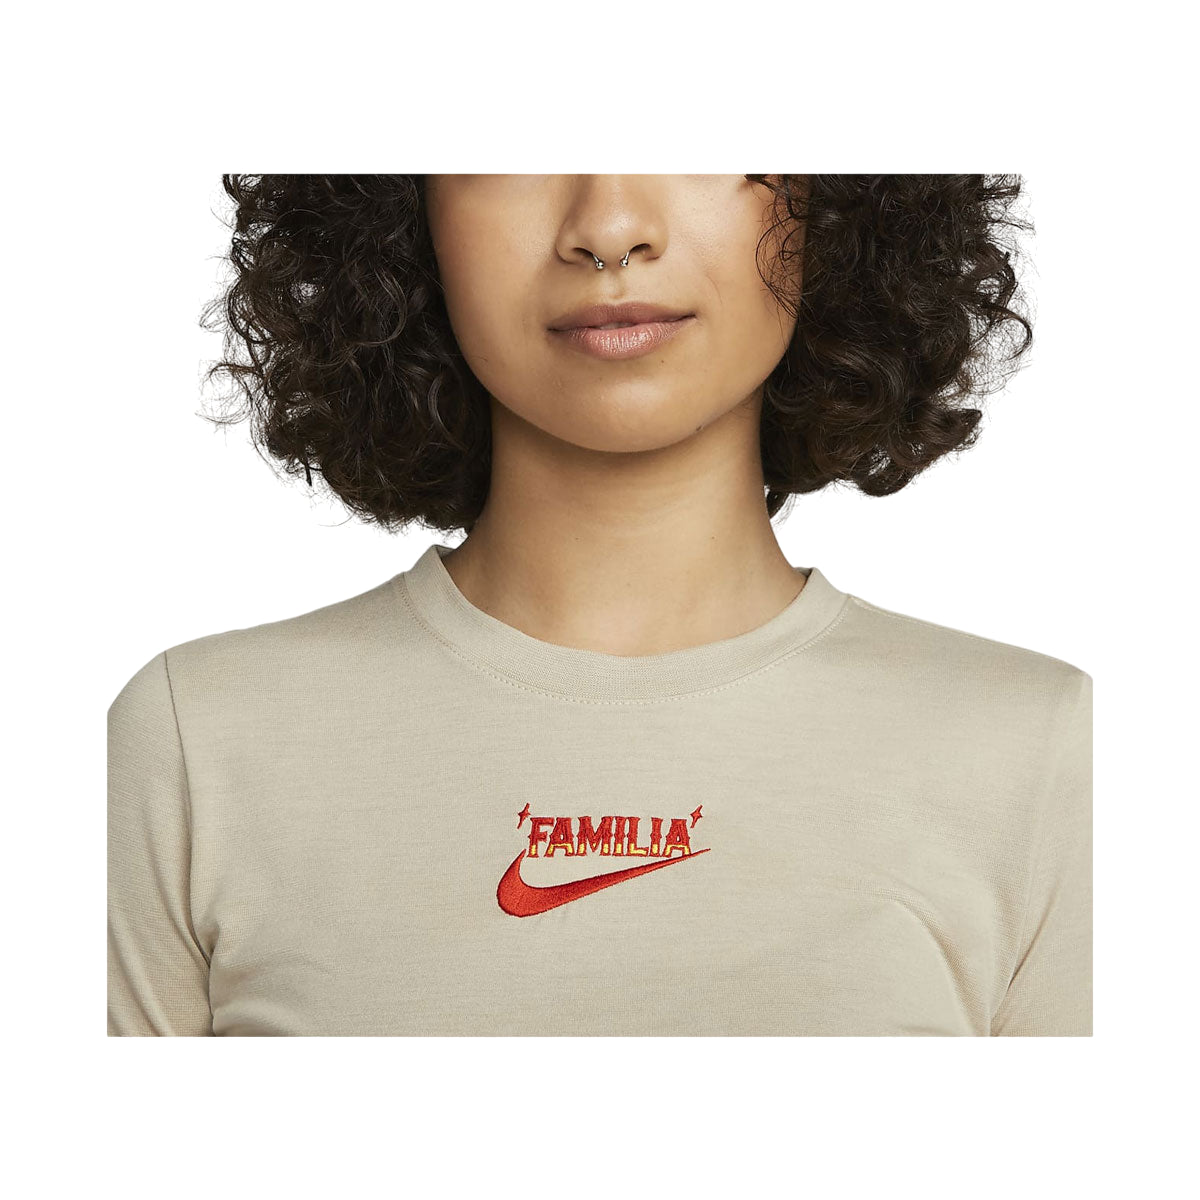 Nike Women's Sportswear Somos Familia Slim Fit Cropped T-Shirt